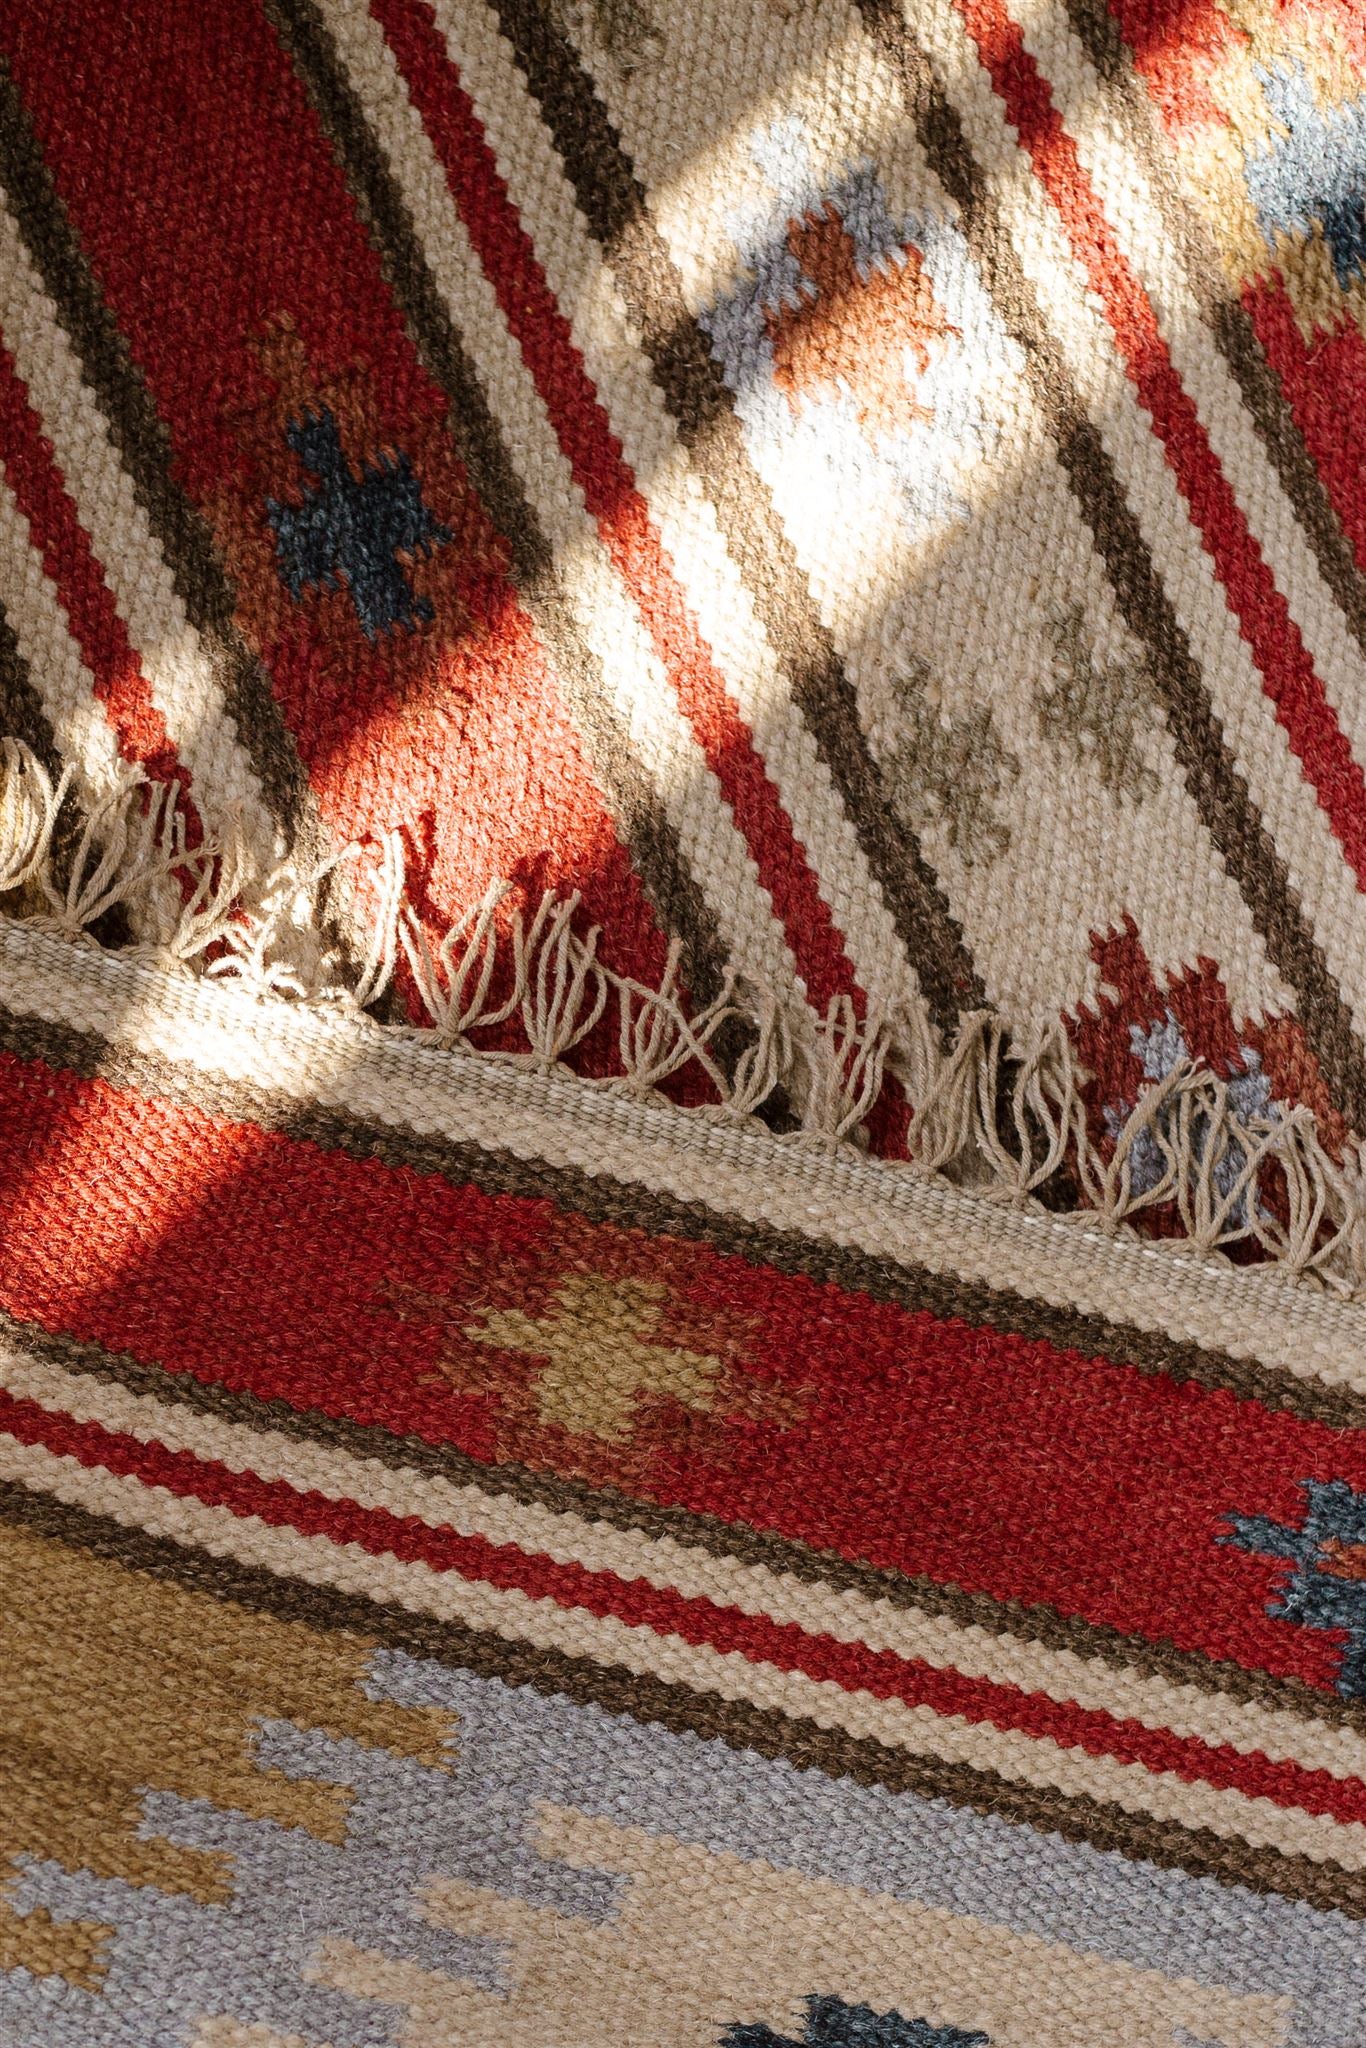 Handmade red kilim rug